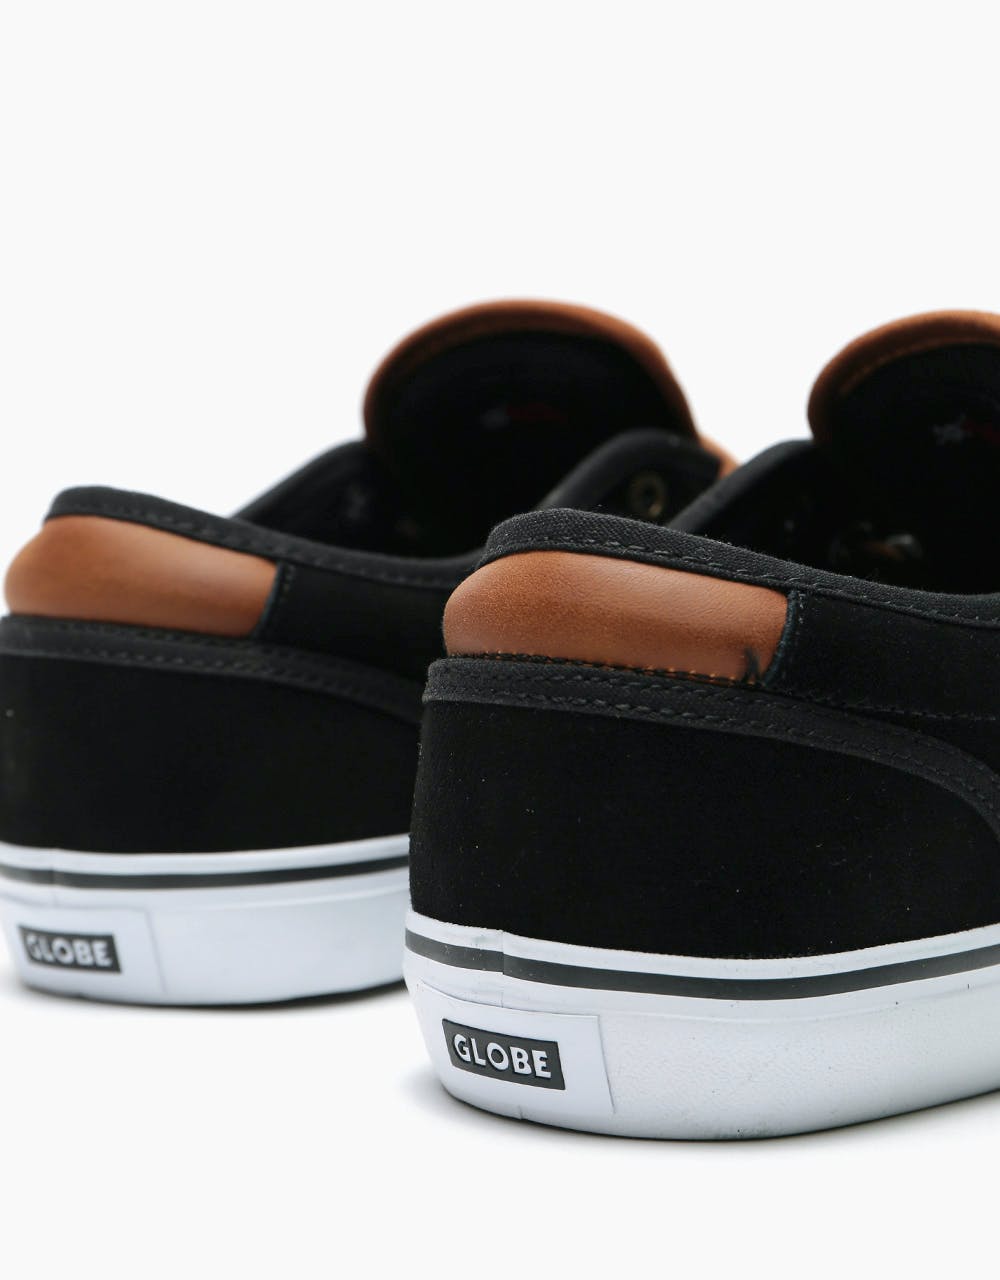 Globe Motley Skate Shoes - Black Suede/Toffee